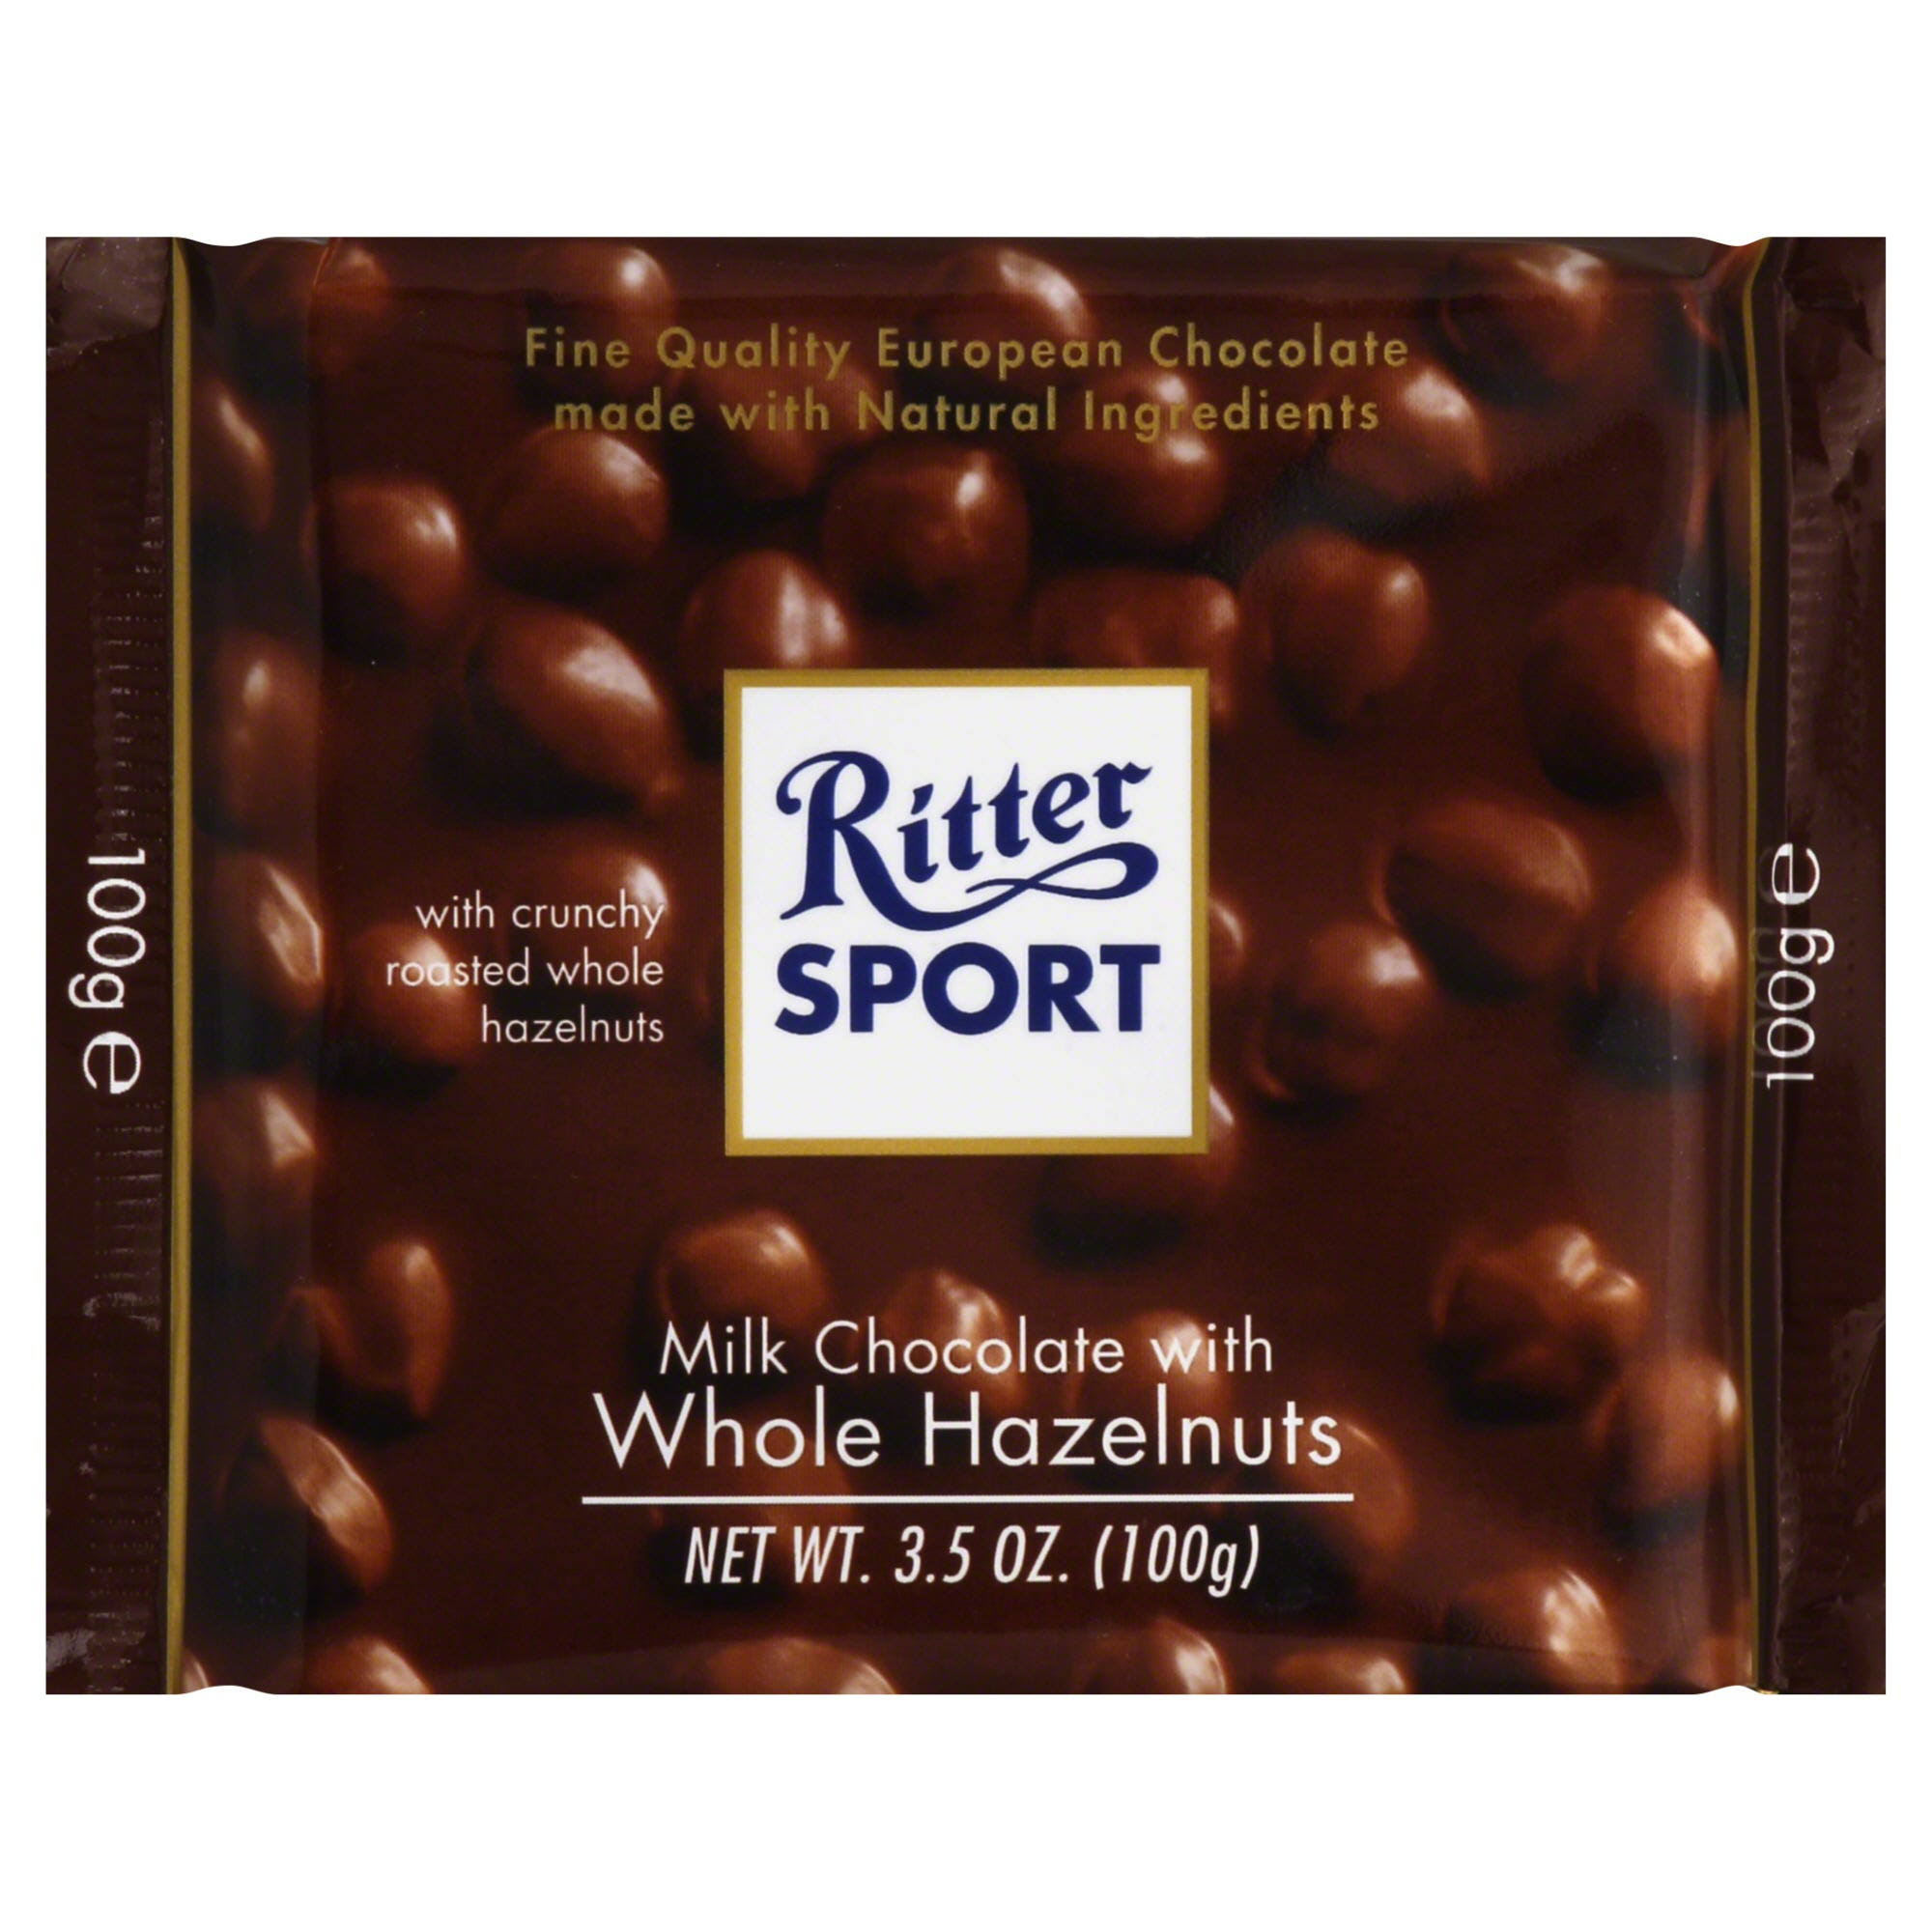 Ritter Sport Milk Chocolate Bar - Whole Hazelnuts, 100g